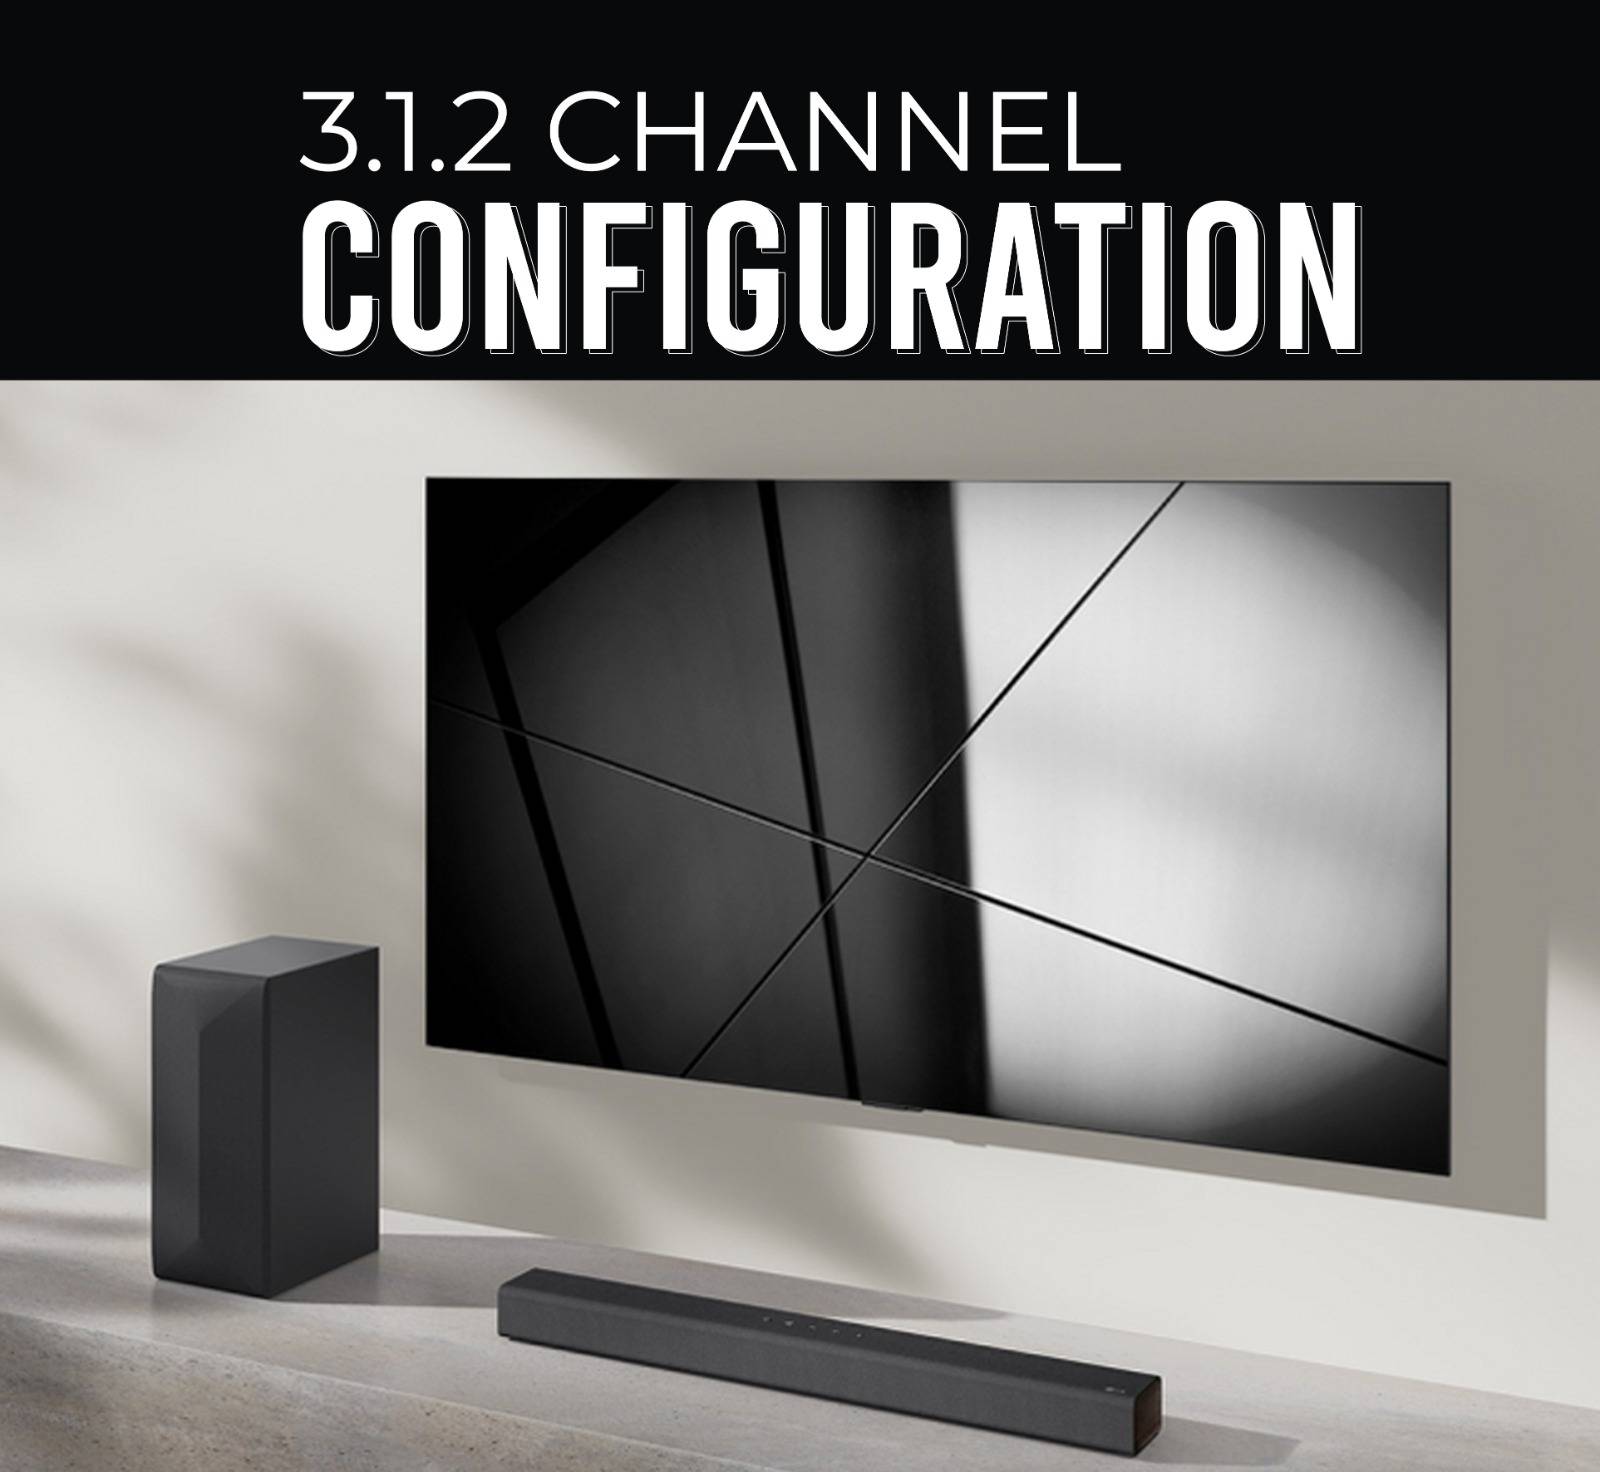 3.1.2 Channel Configuration